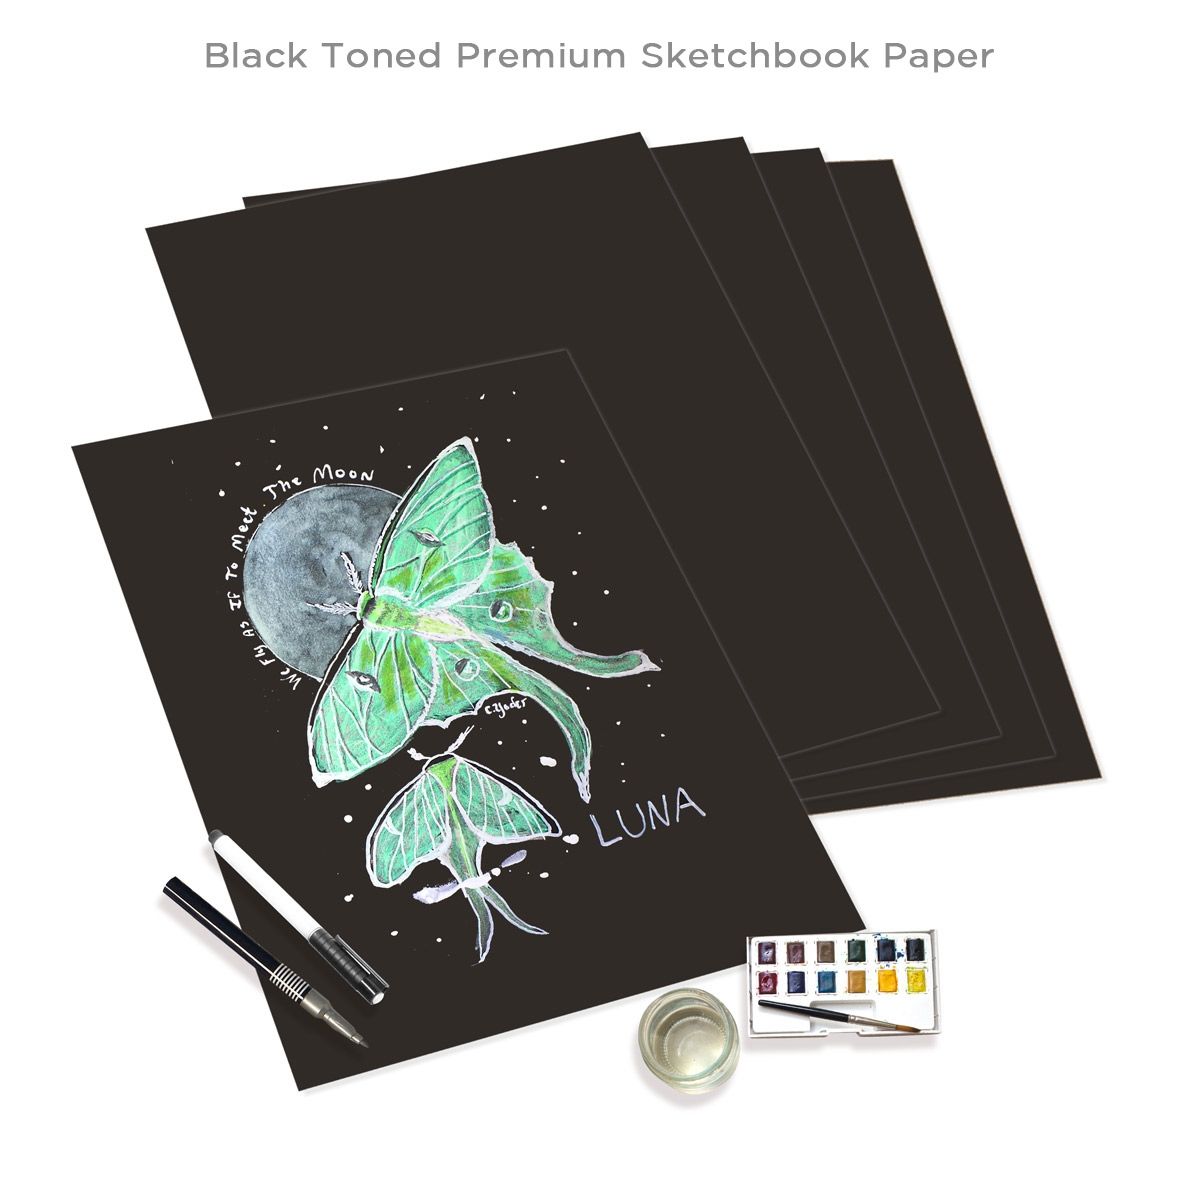 Black Toned Premium Sketchbook Paper with Art